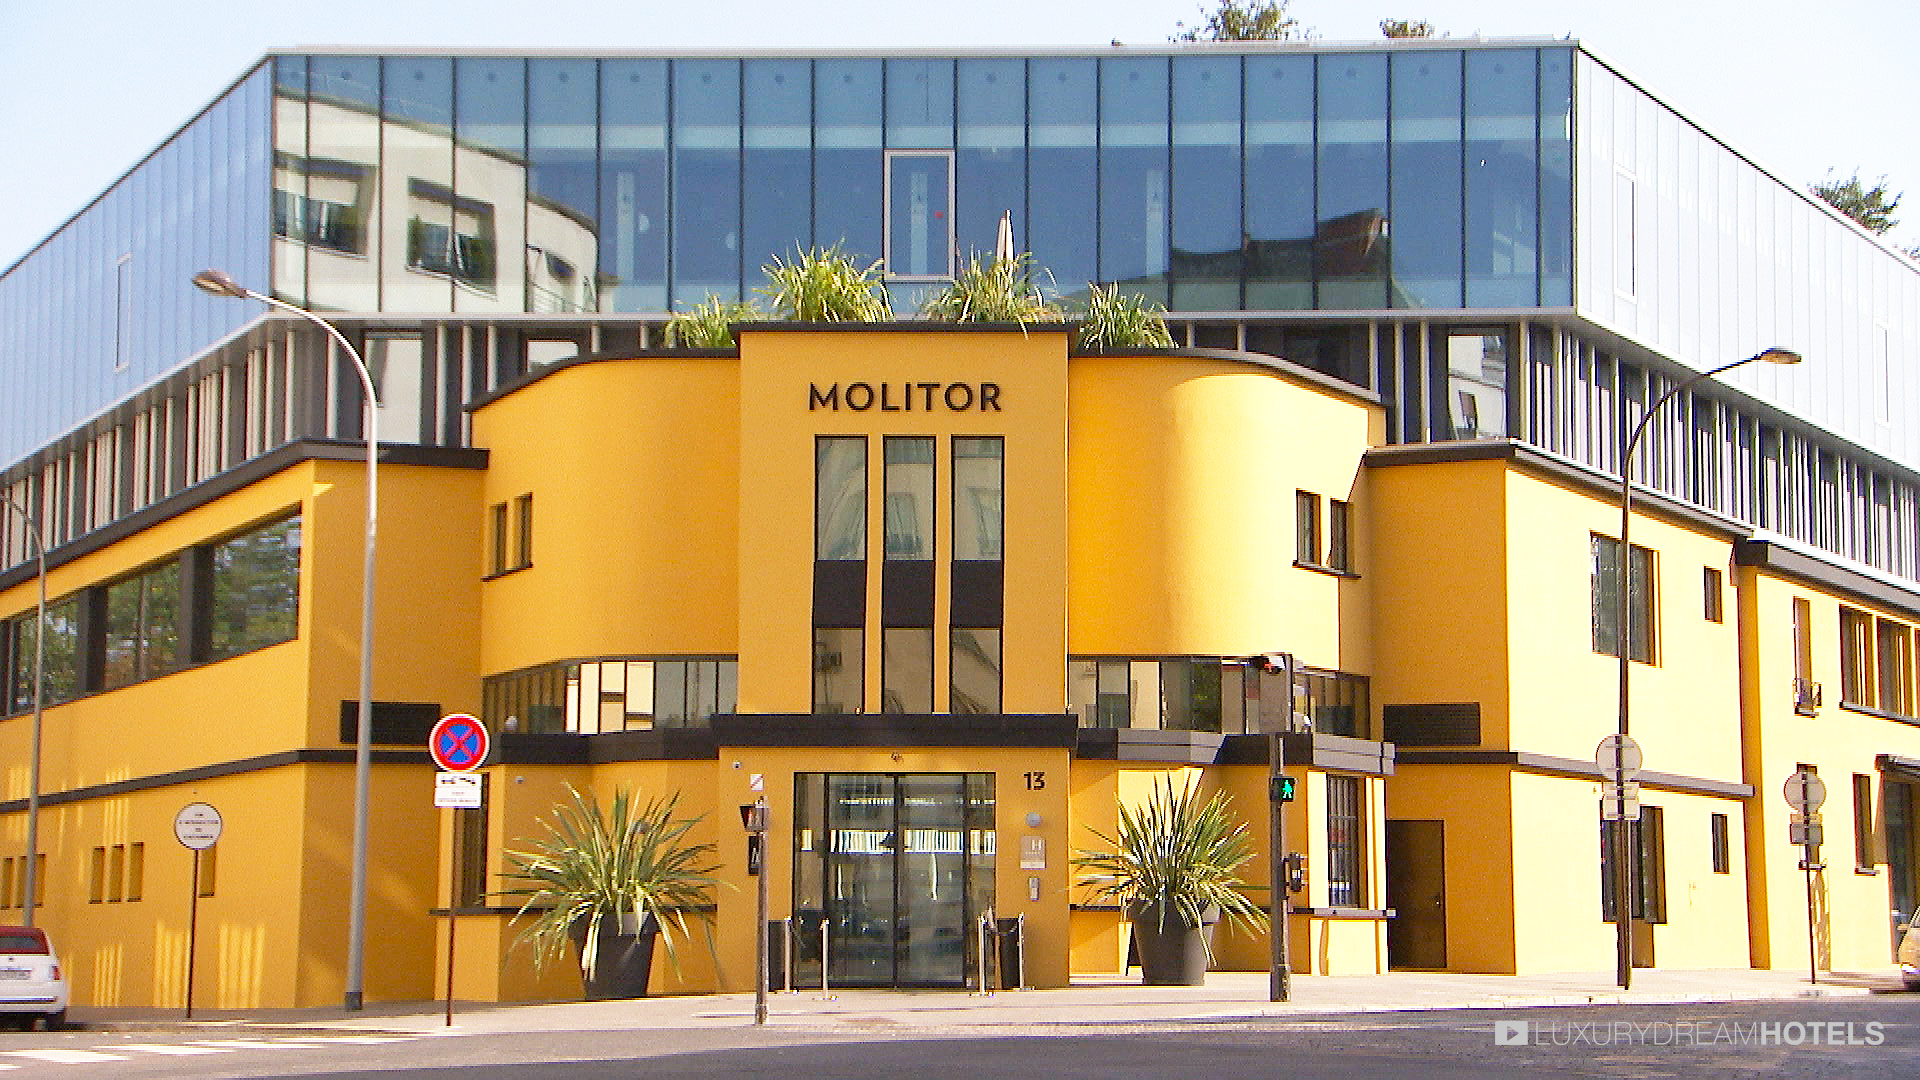 Hotel Molitor Paris By Alain Derbesse Architects – Bar Furniture serapportantà Restaurant Piscine Molitor